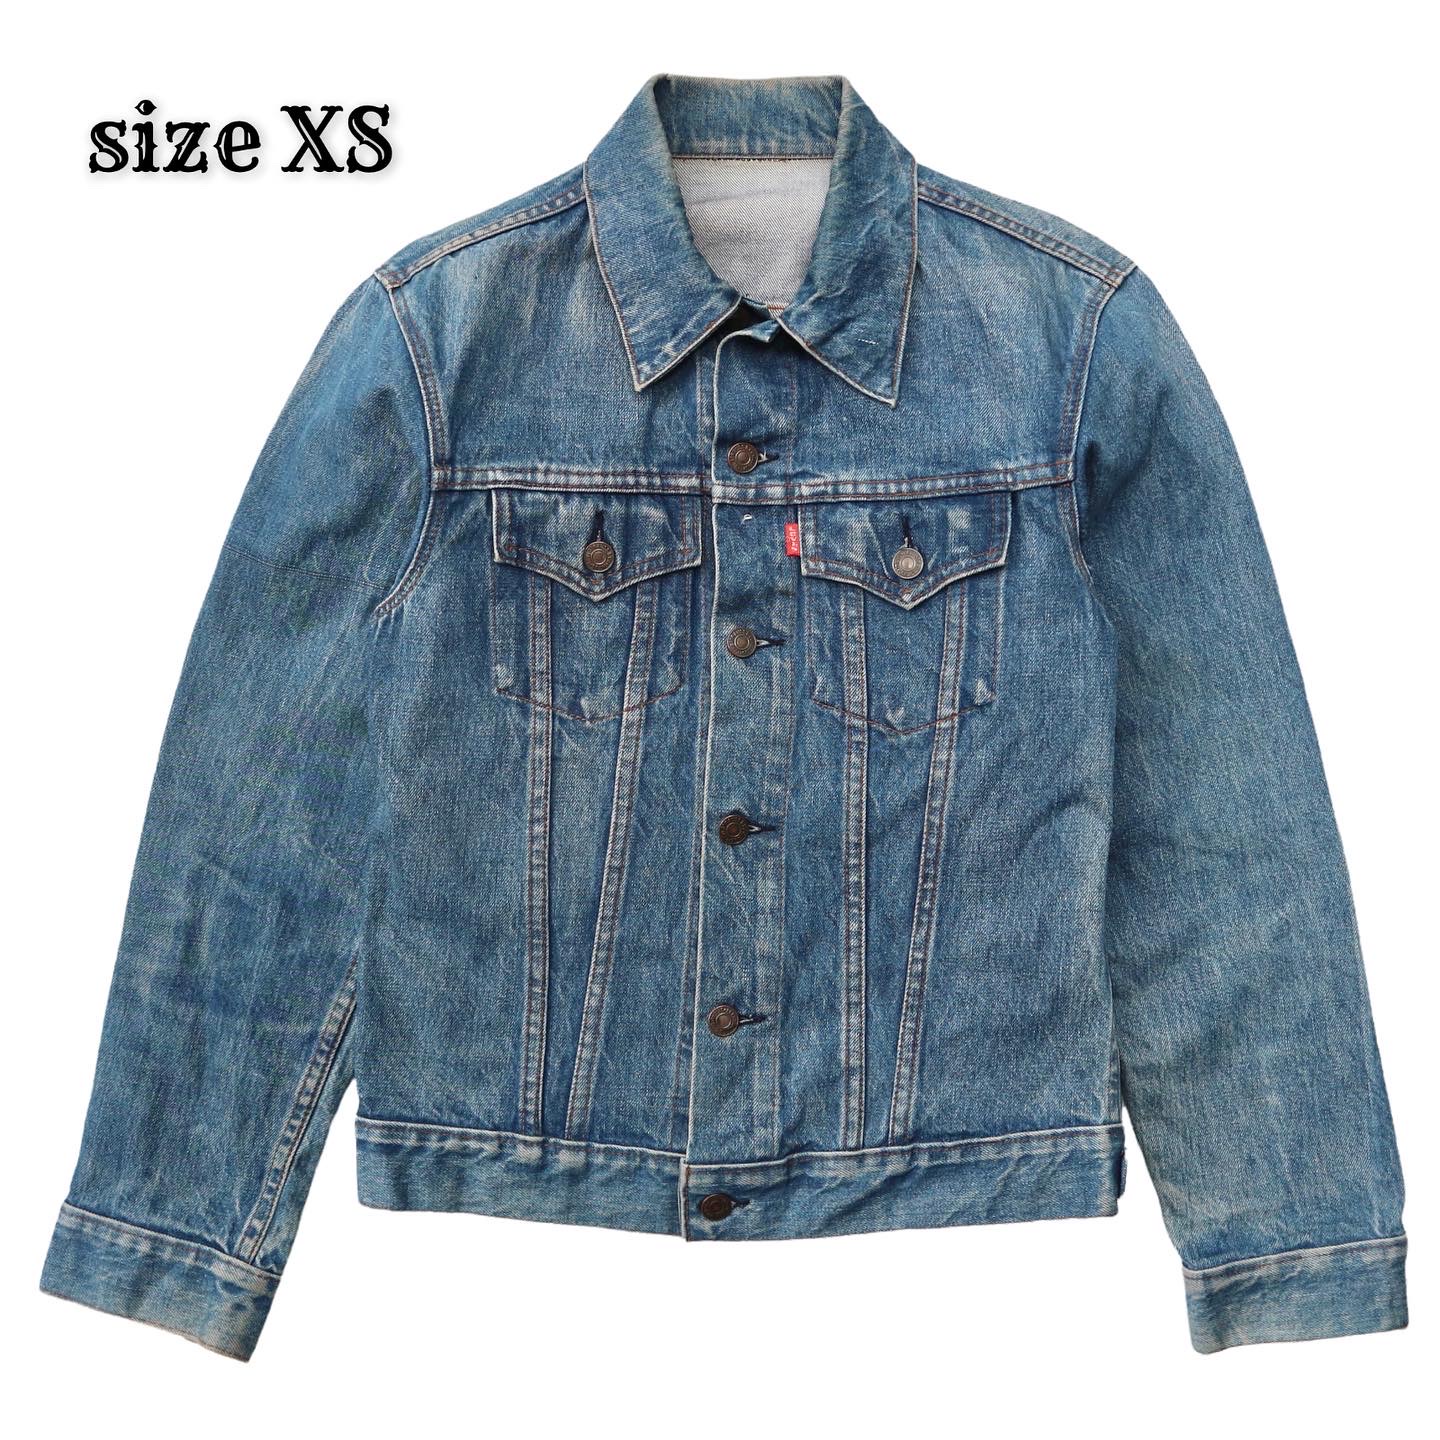 Levi’s Denim Jacket Size XS